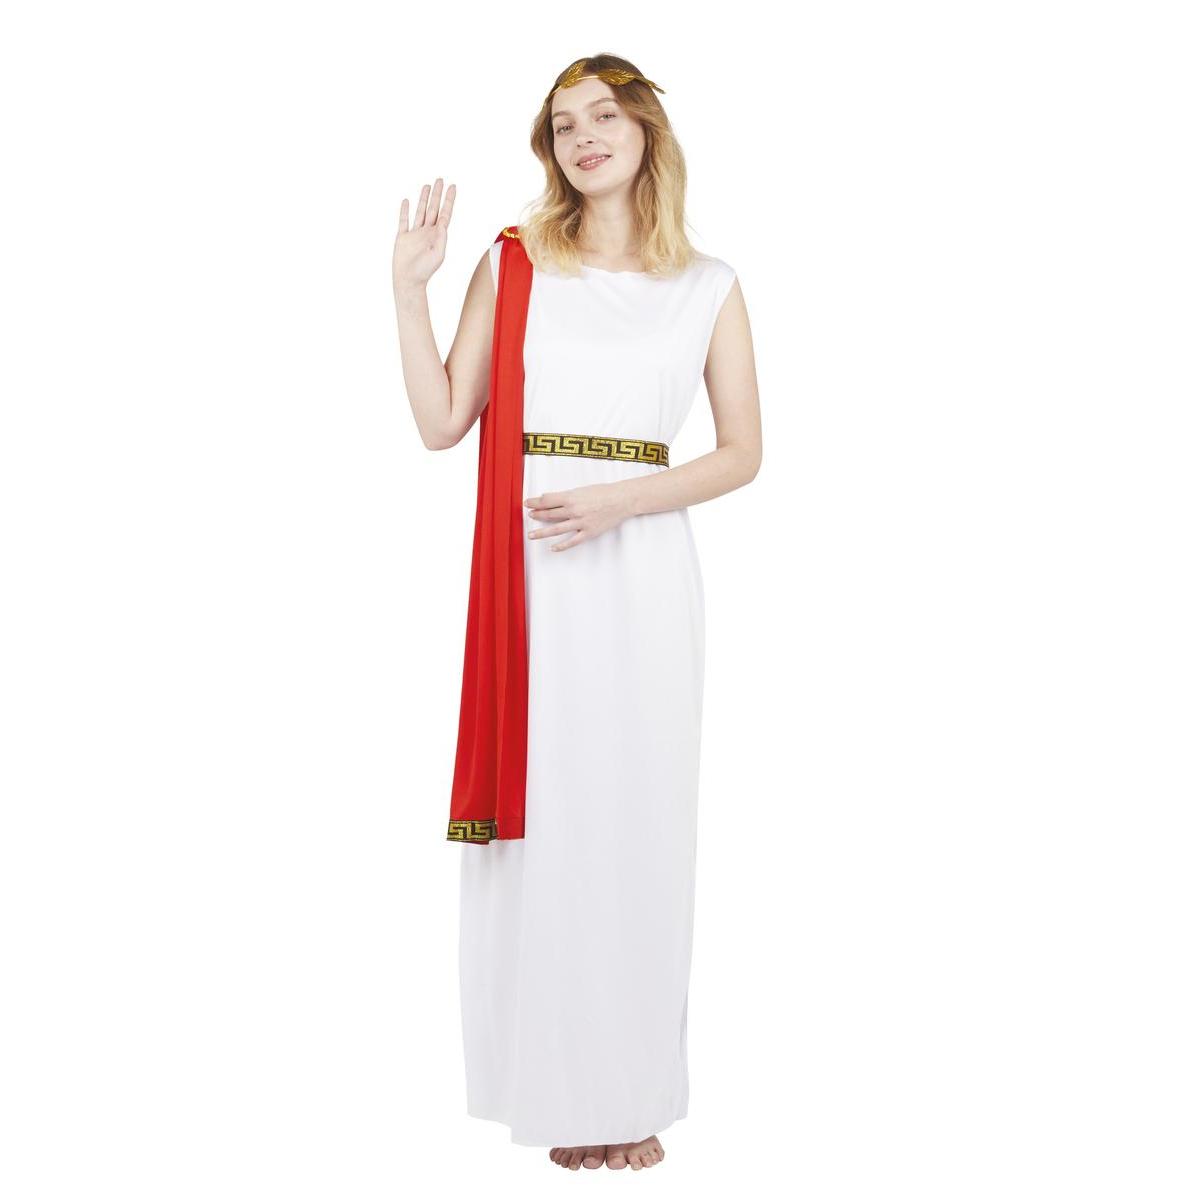 Costume de romaine - L/XL